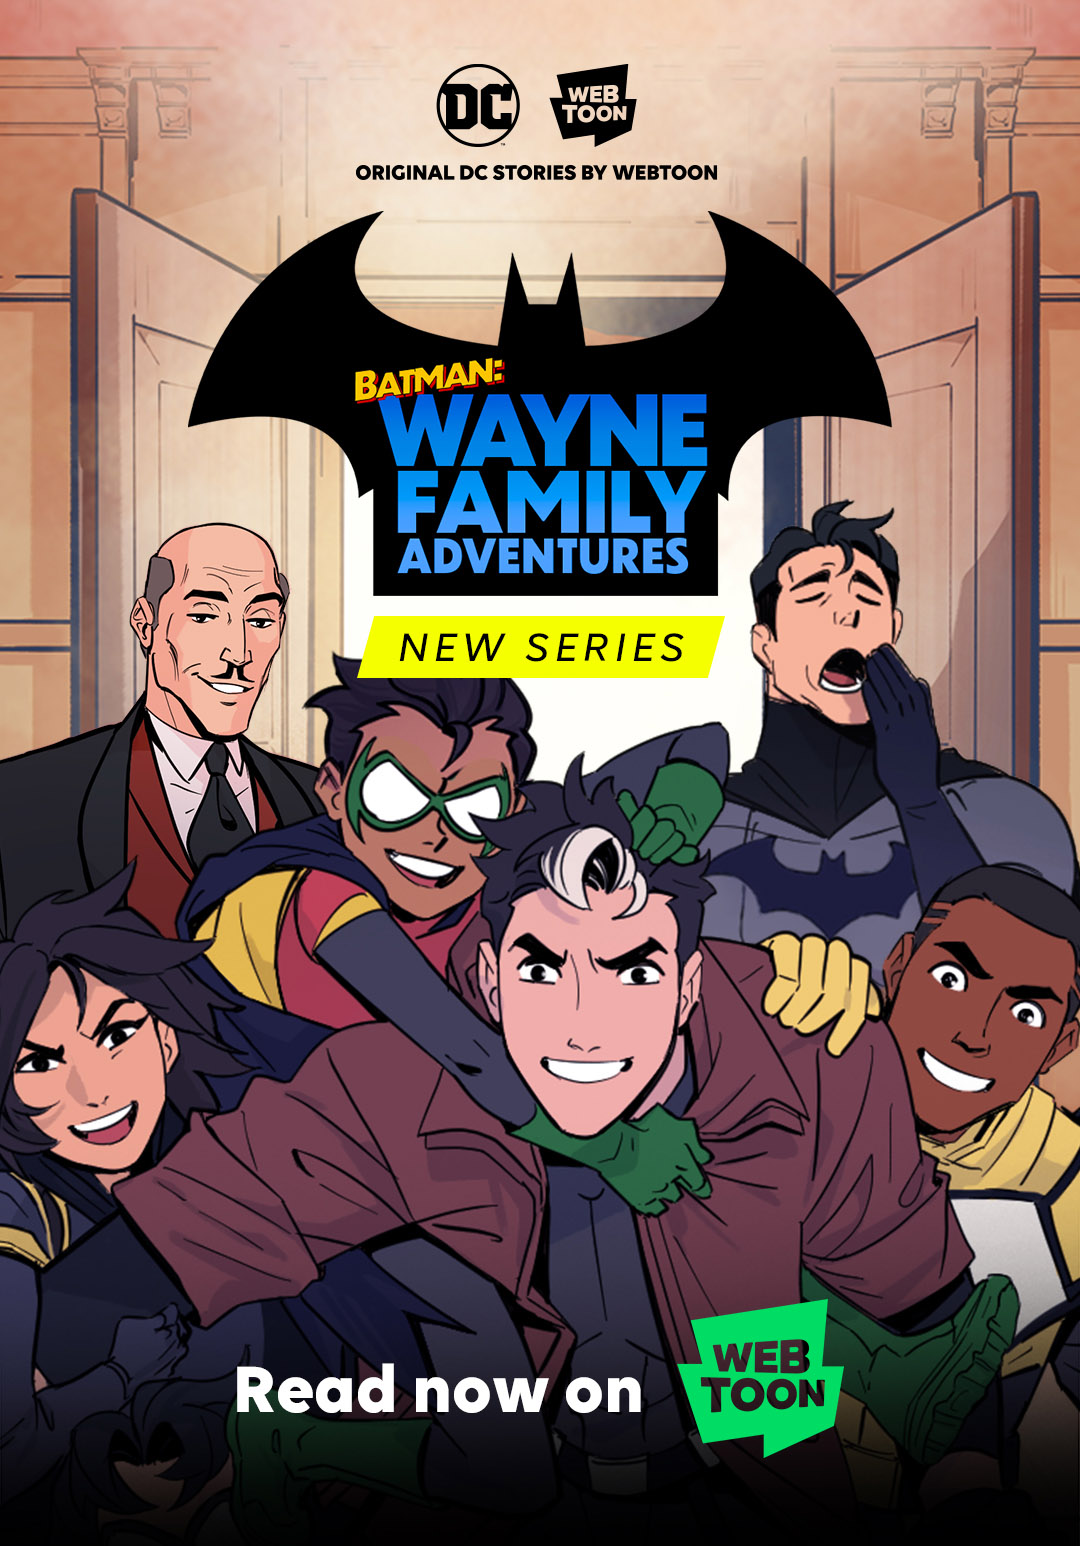 DC, Webtoon Debut Batman Mobile Comics Series